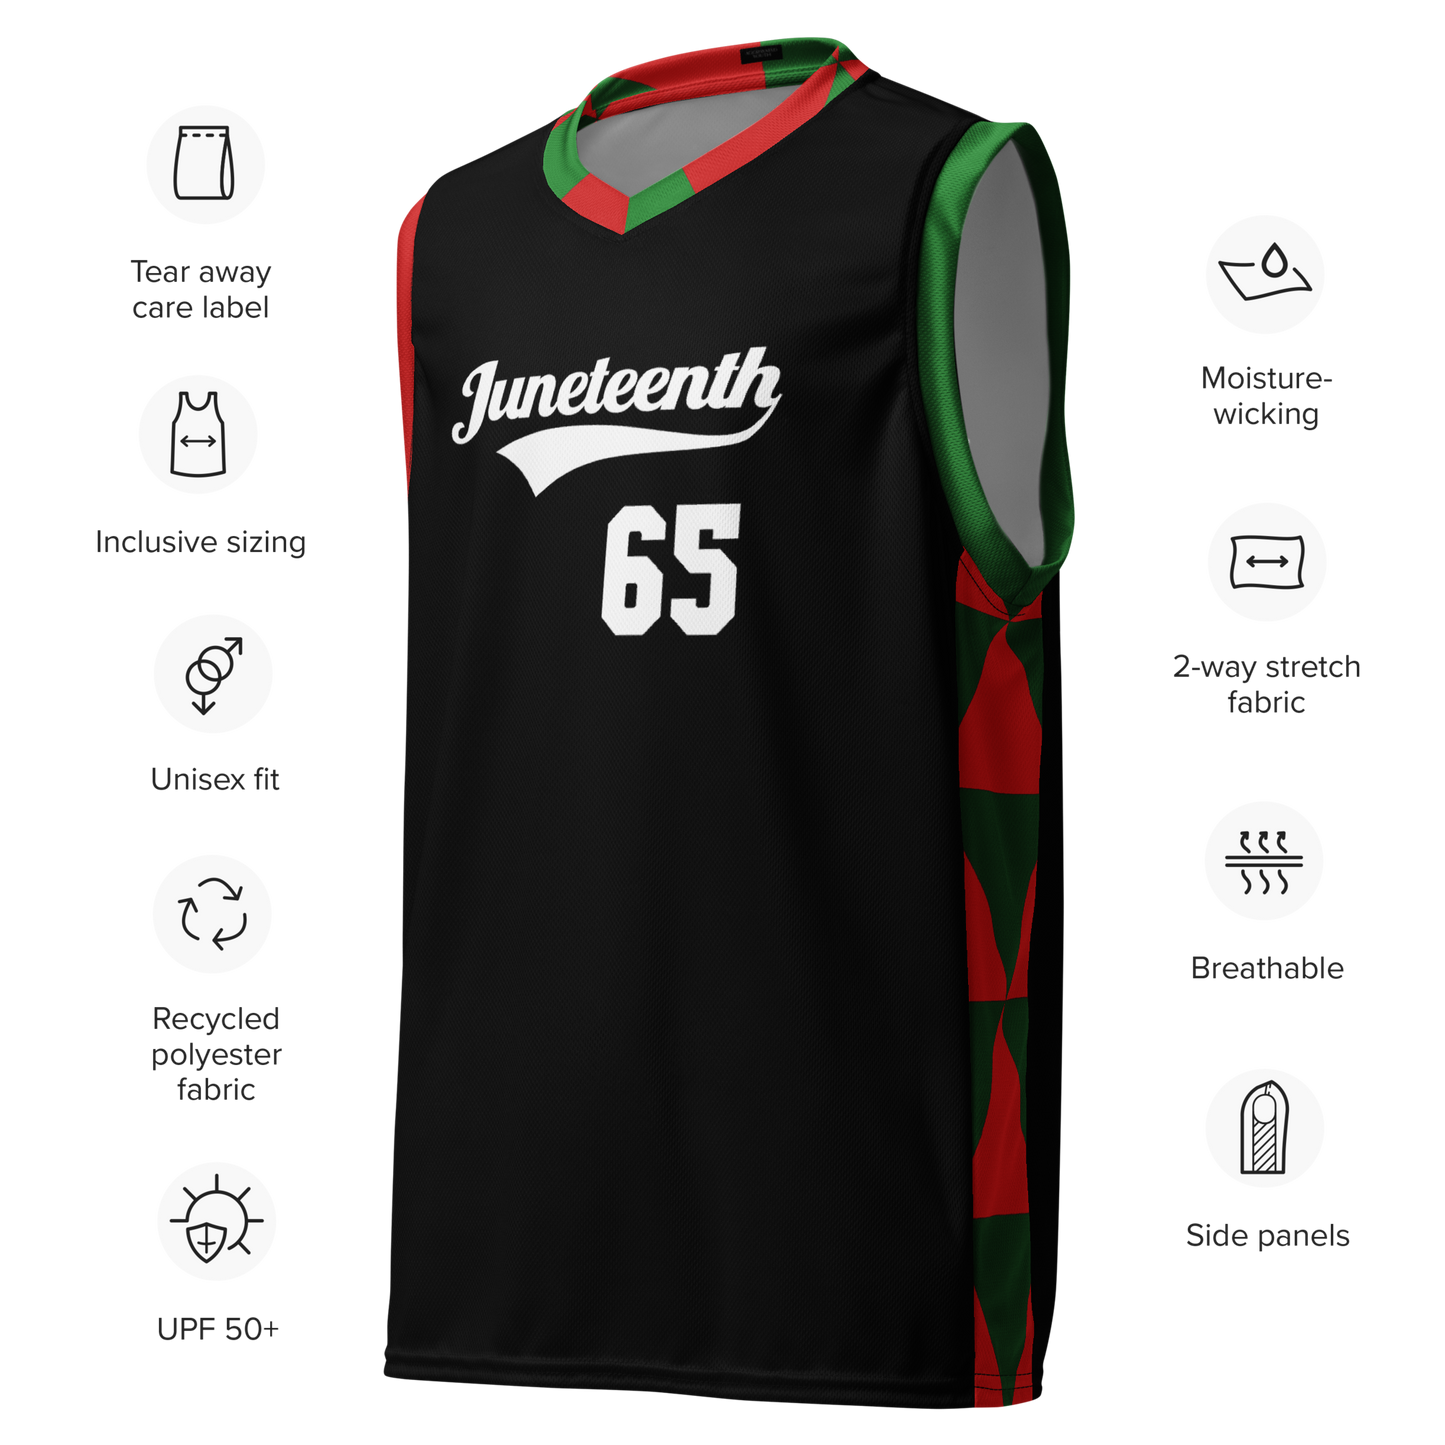 Juneteenth Recycled Basketball Jersey